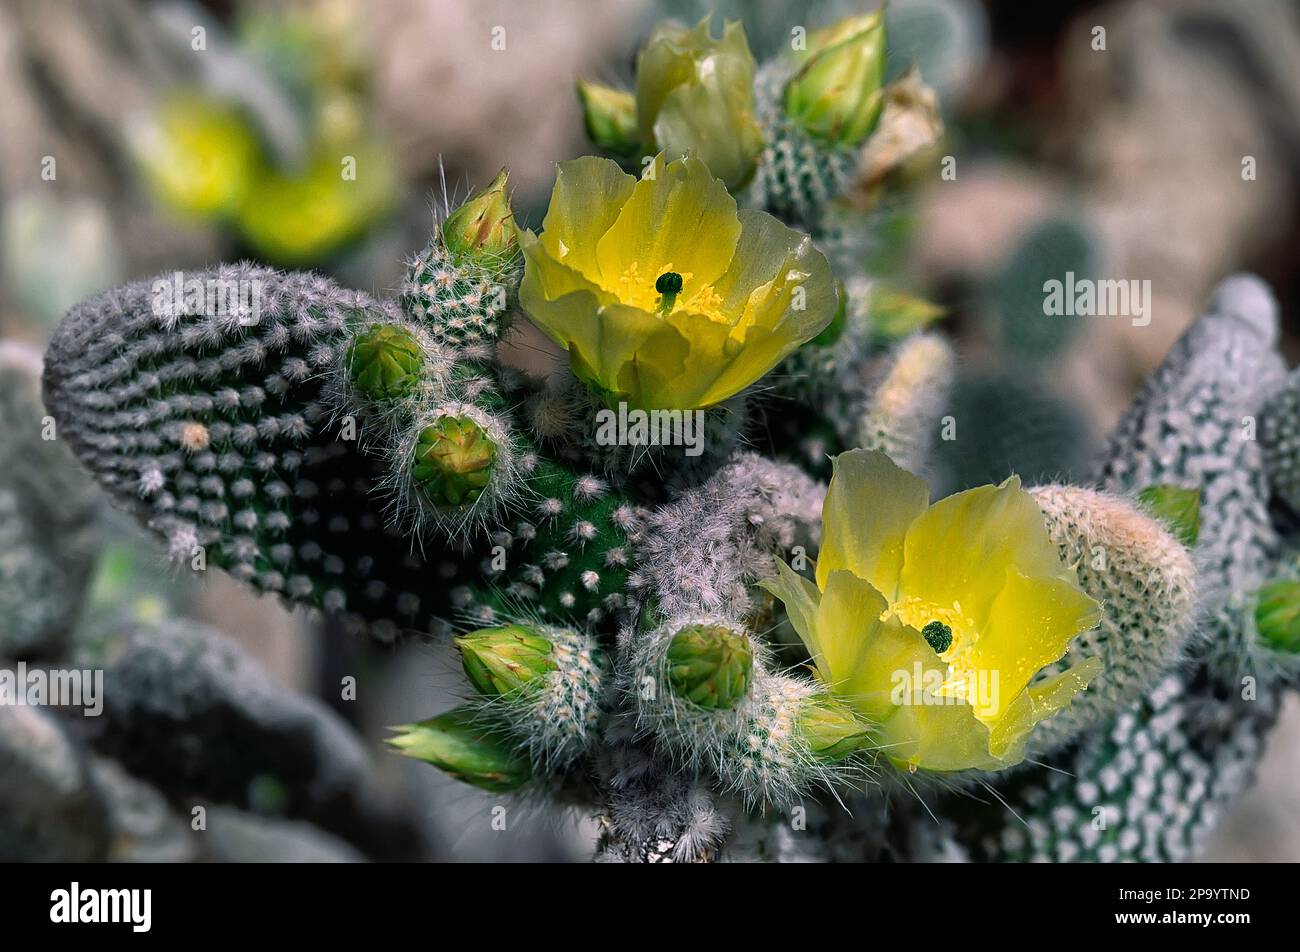 Bunny ears cactus (Opuntia microdasys var. albispina). Cactaceae, succulent plant, ornamental cactus. Stock Photo